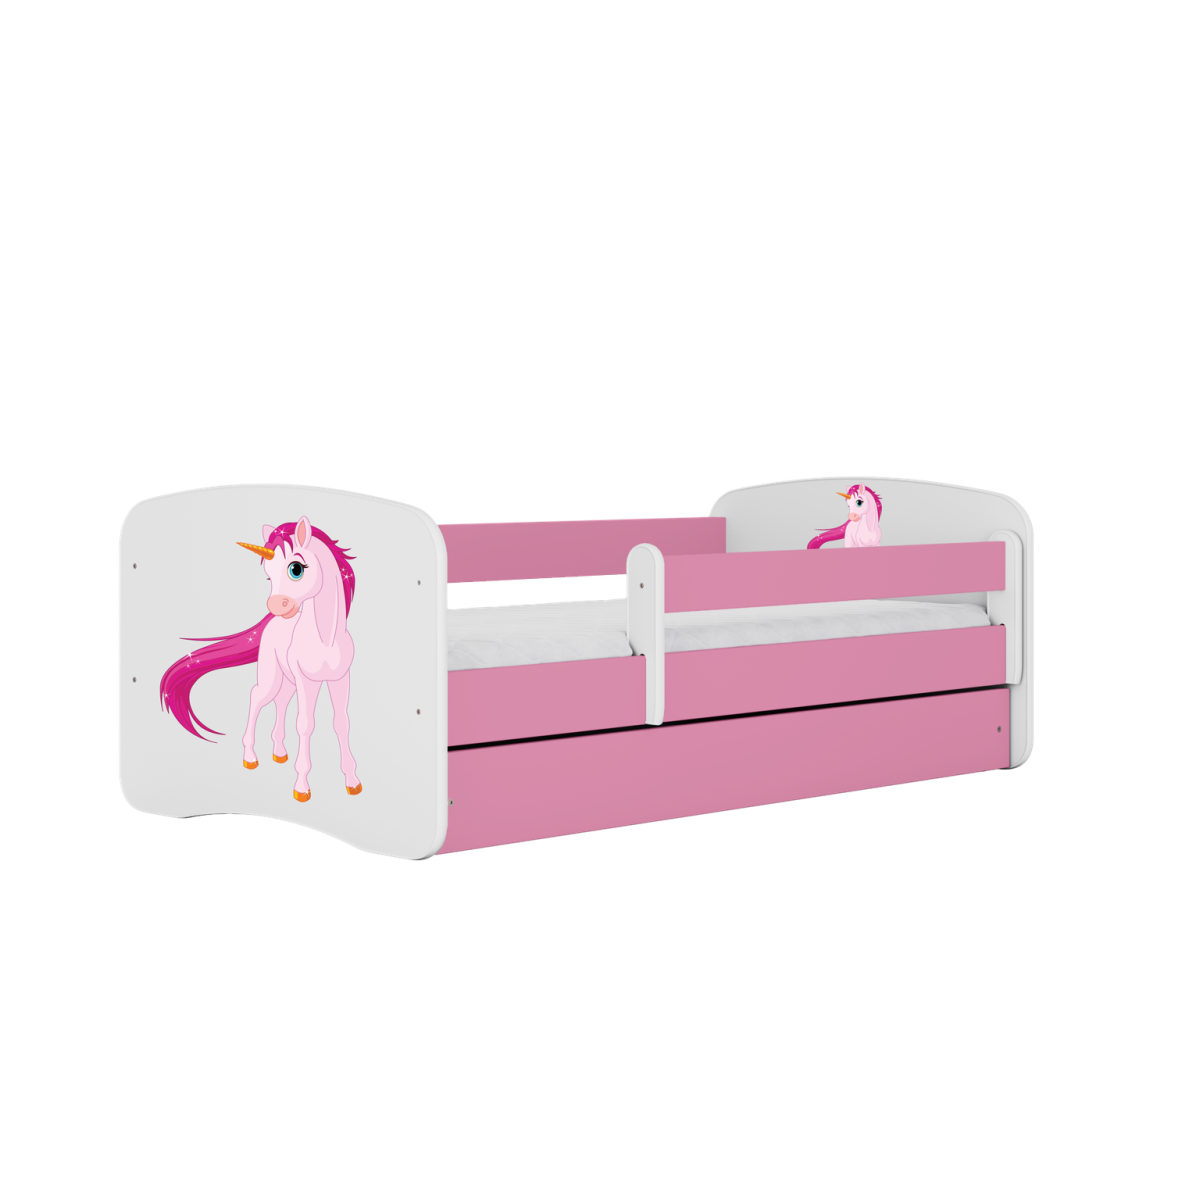 Detská posteľ Babydreams jednorožec ružová